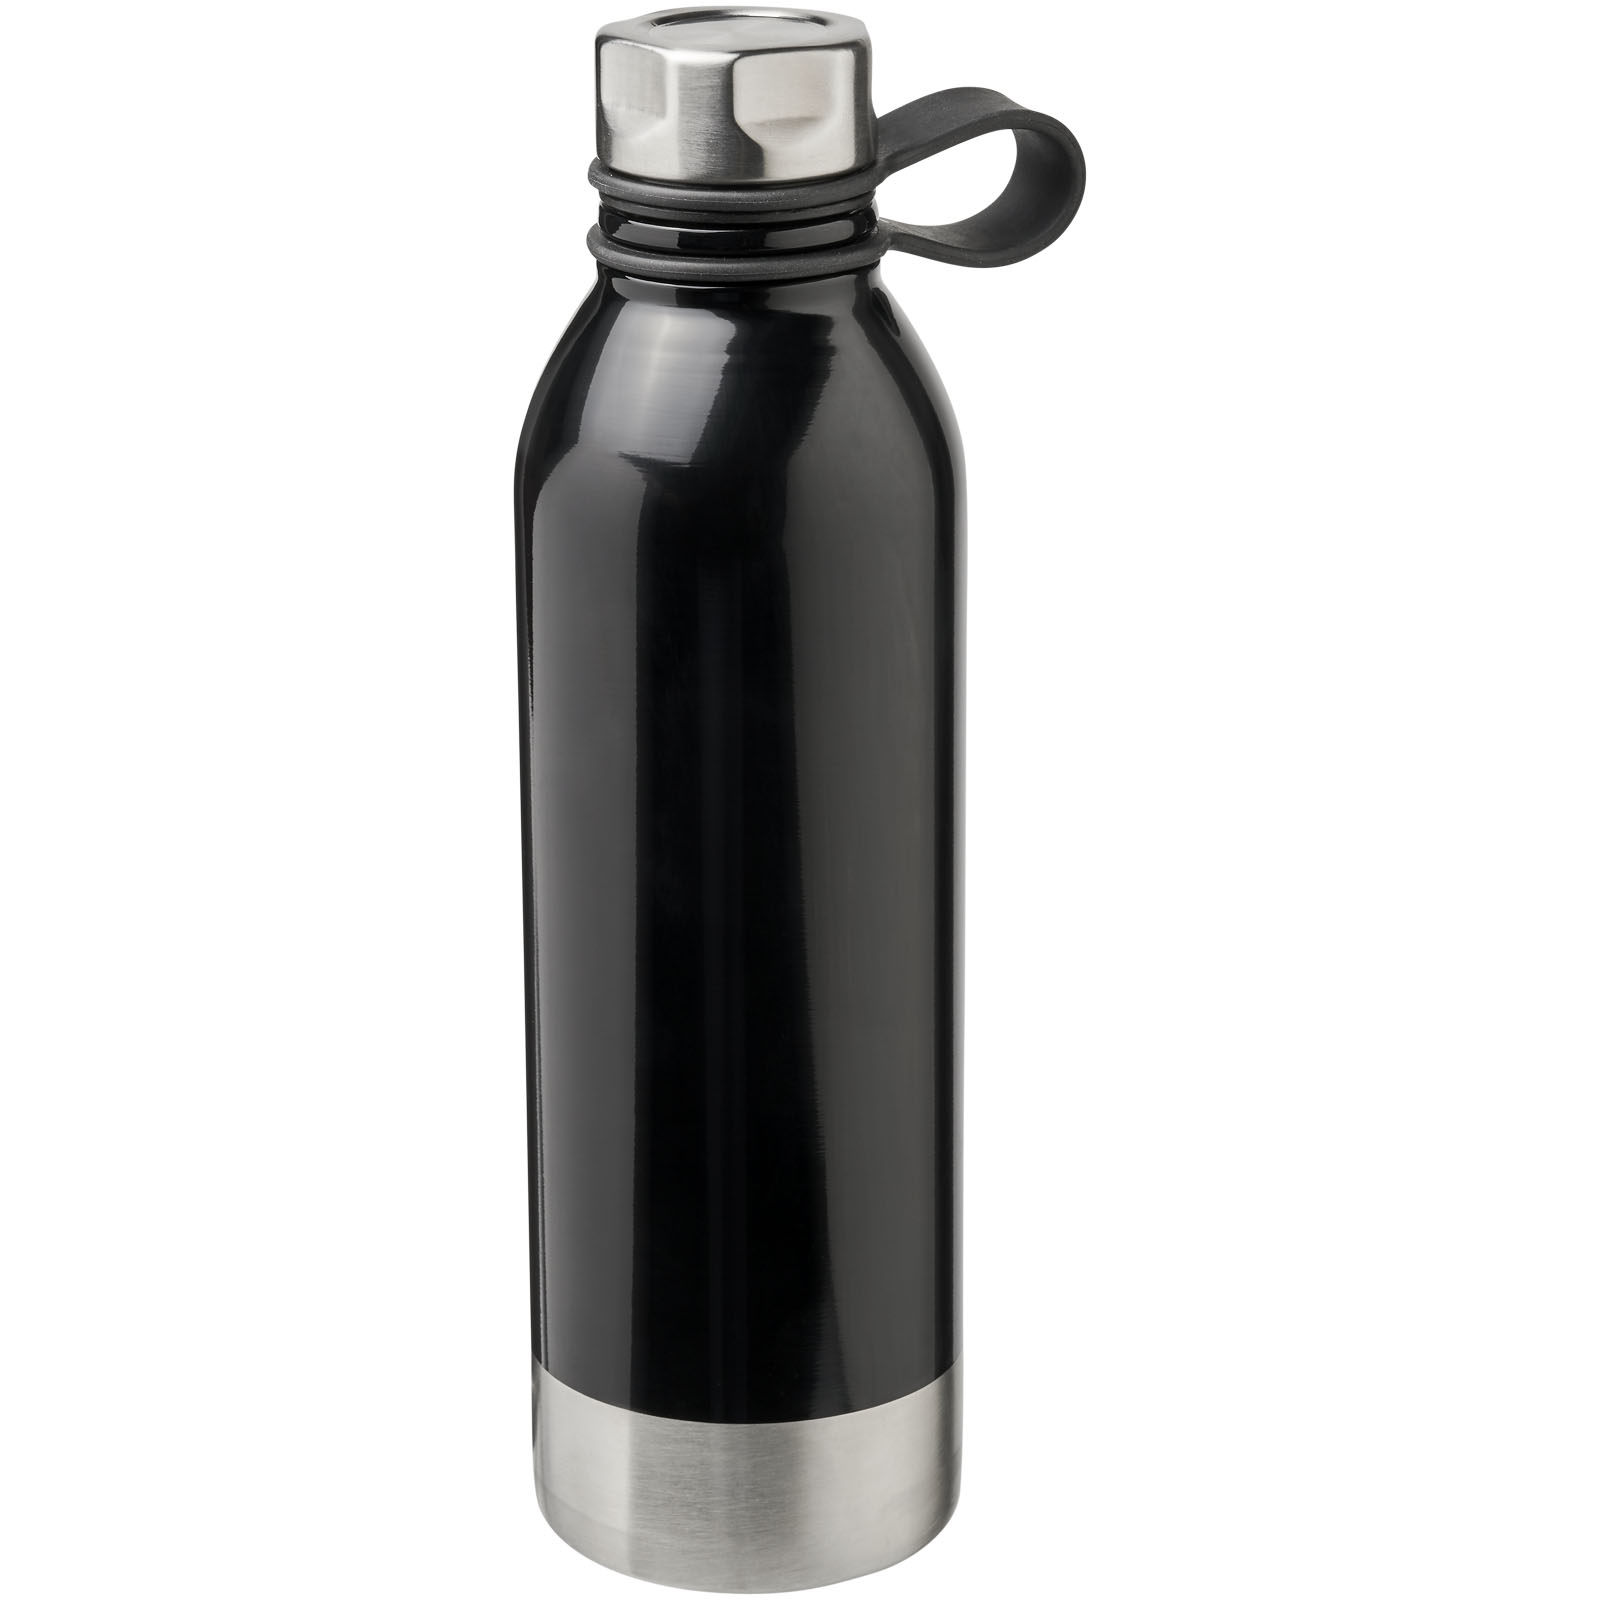 Water bottles - Perth 740 ml stainless steel sport bottle